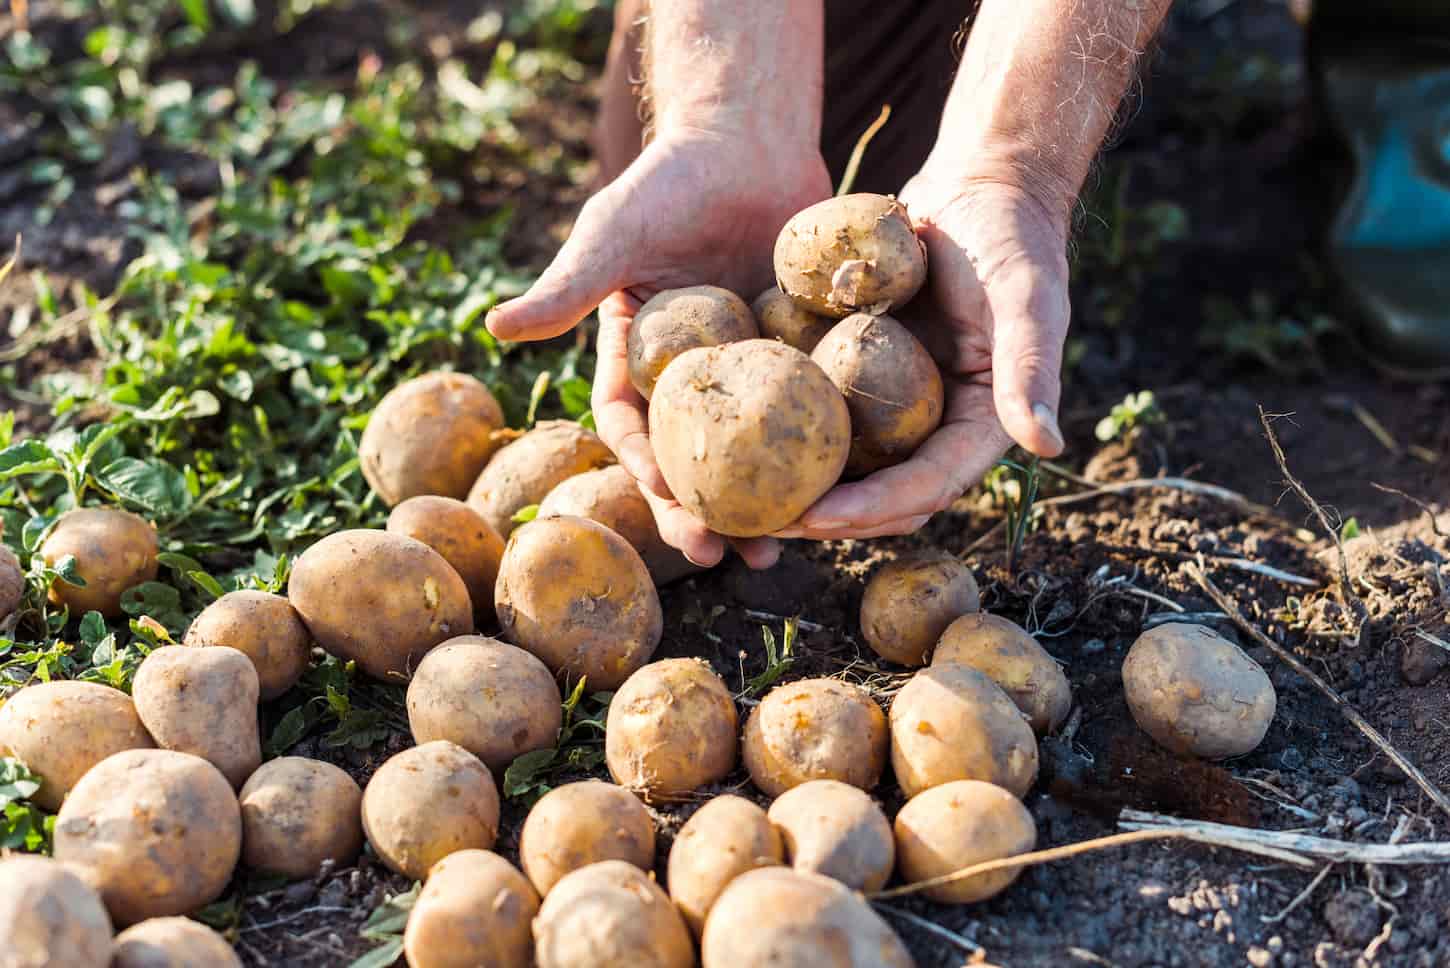 Do Potatoes Grow on Trees?